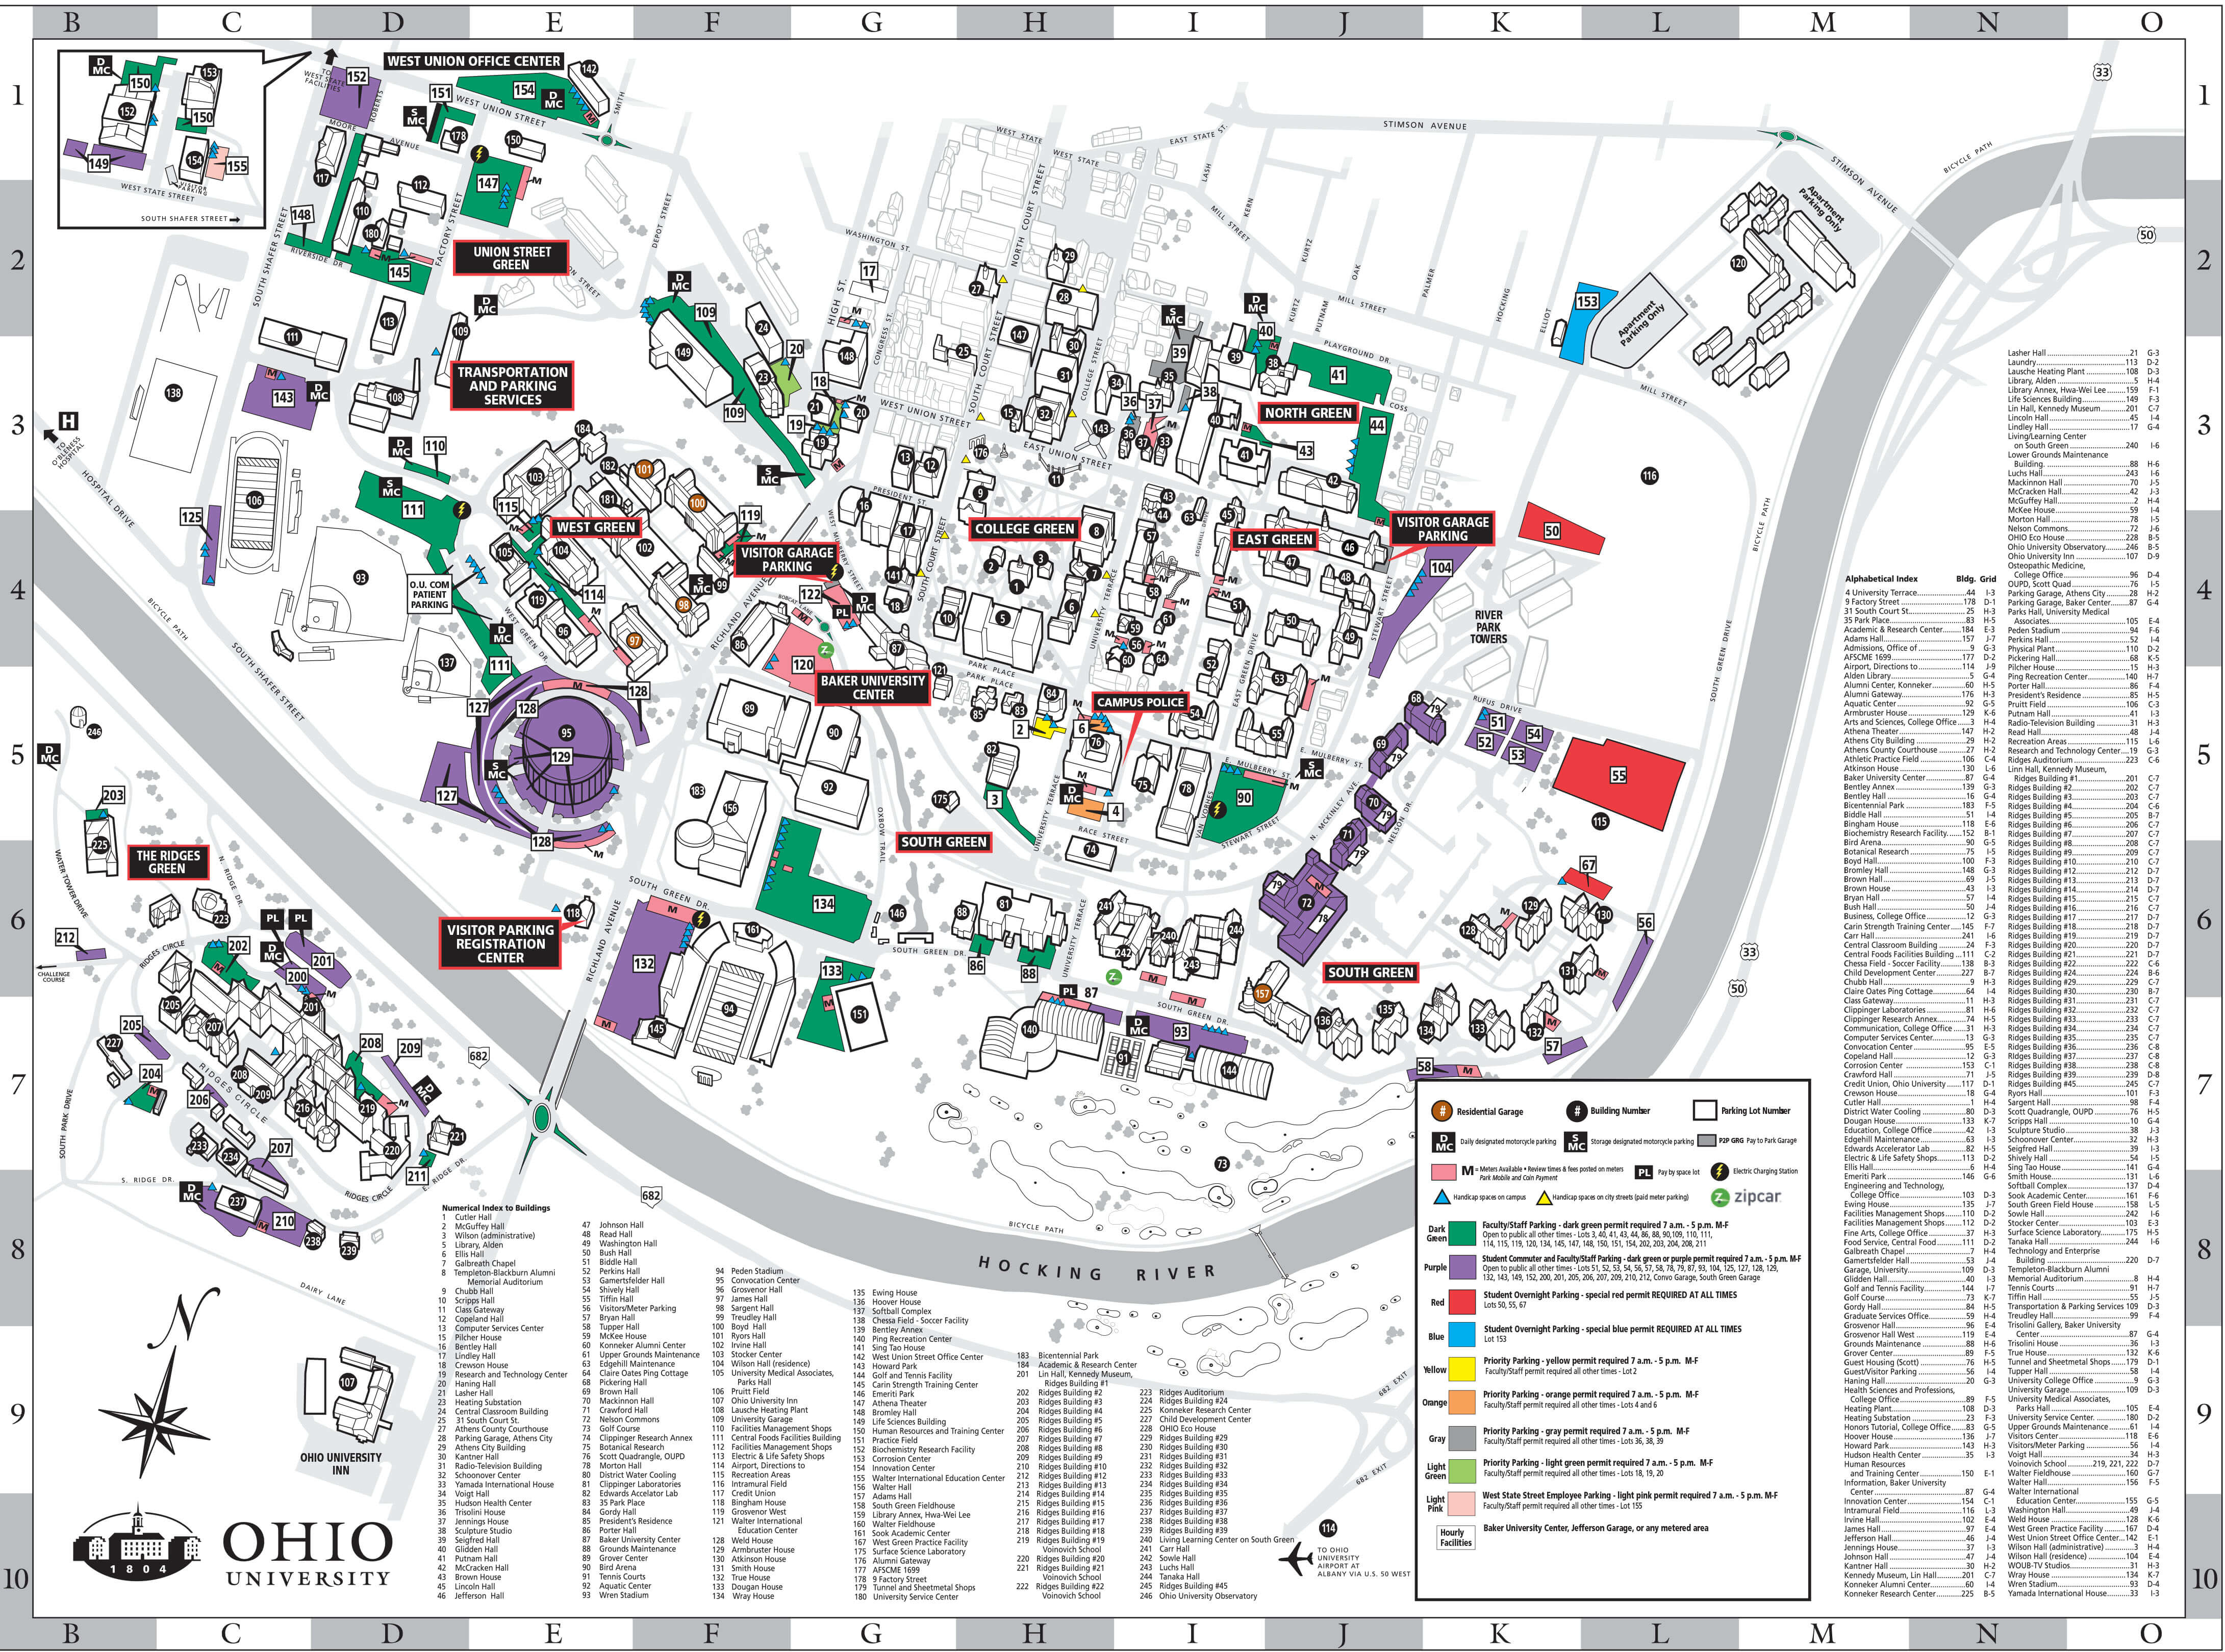 ohio state university campus map pdf Athens Campus Parking Map Ohio University ohio state university campus map pdf